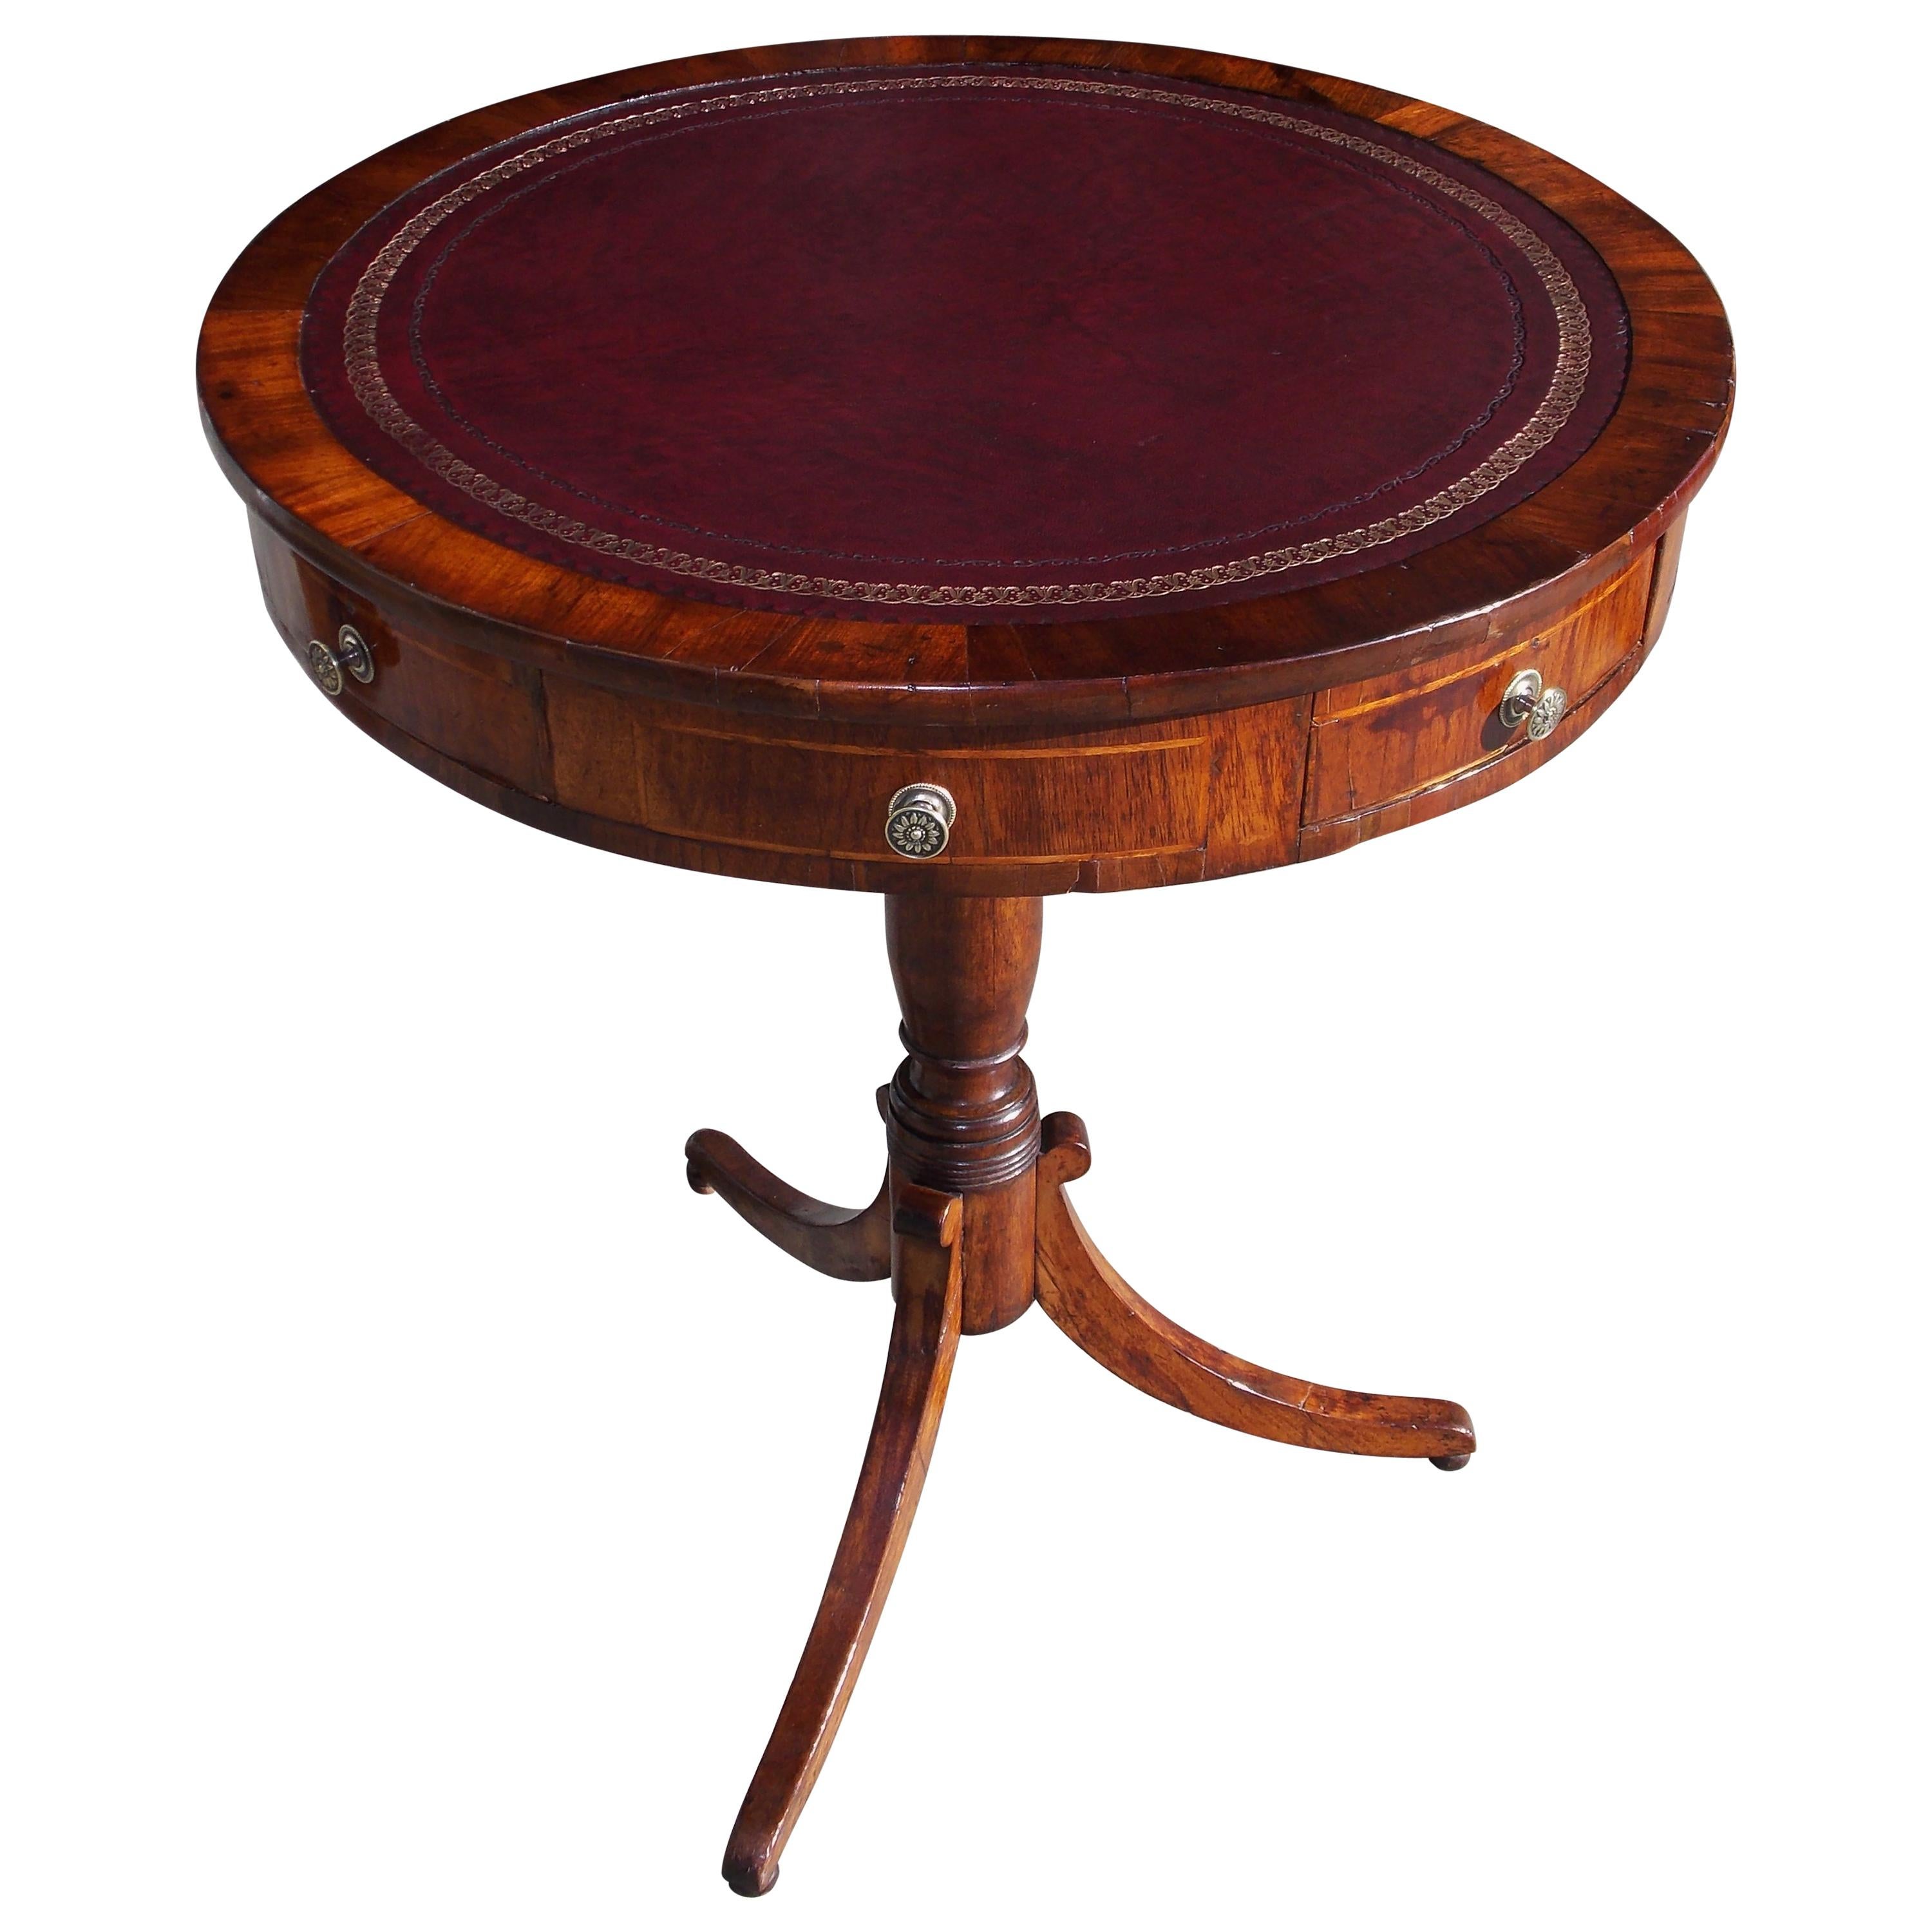 English Regency Mahogany Satinwood Inlaid Leather Top Drum Table, Circa 1815